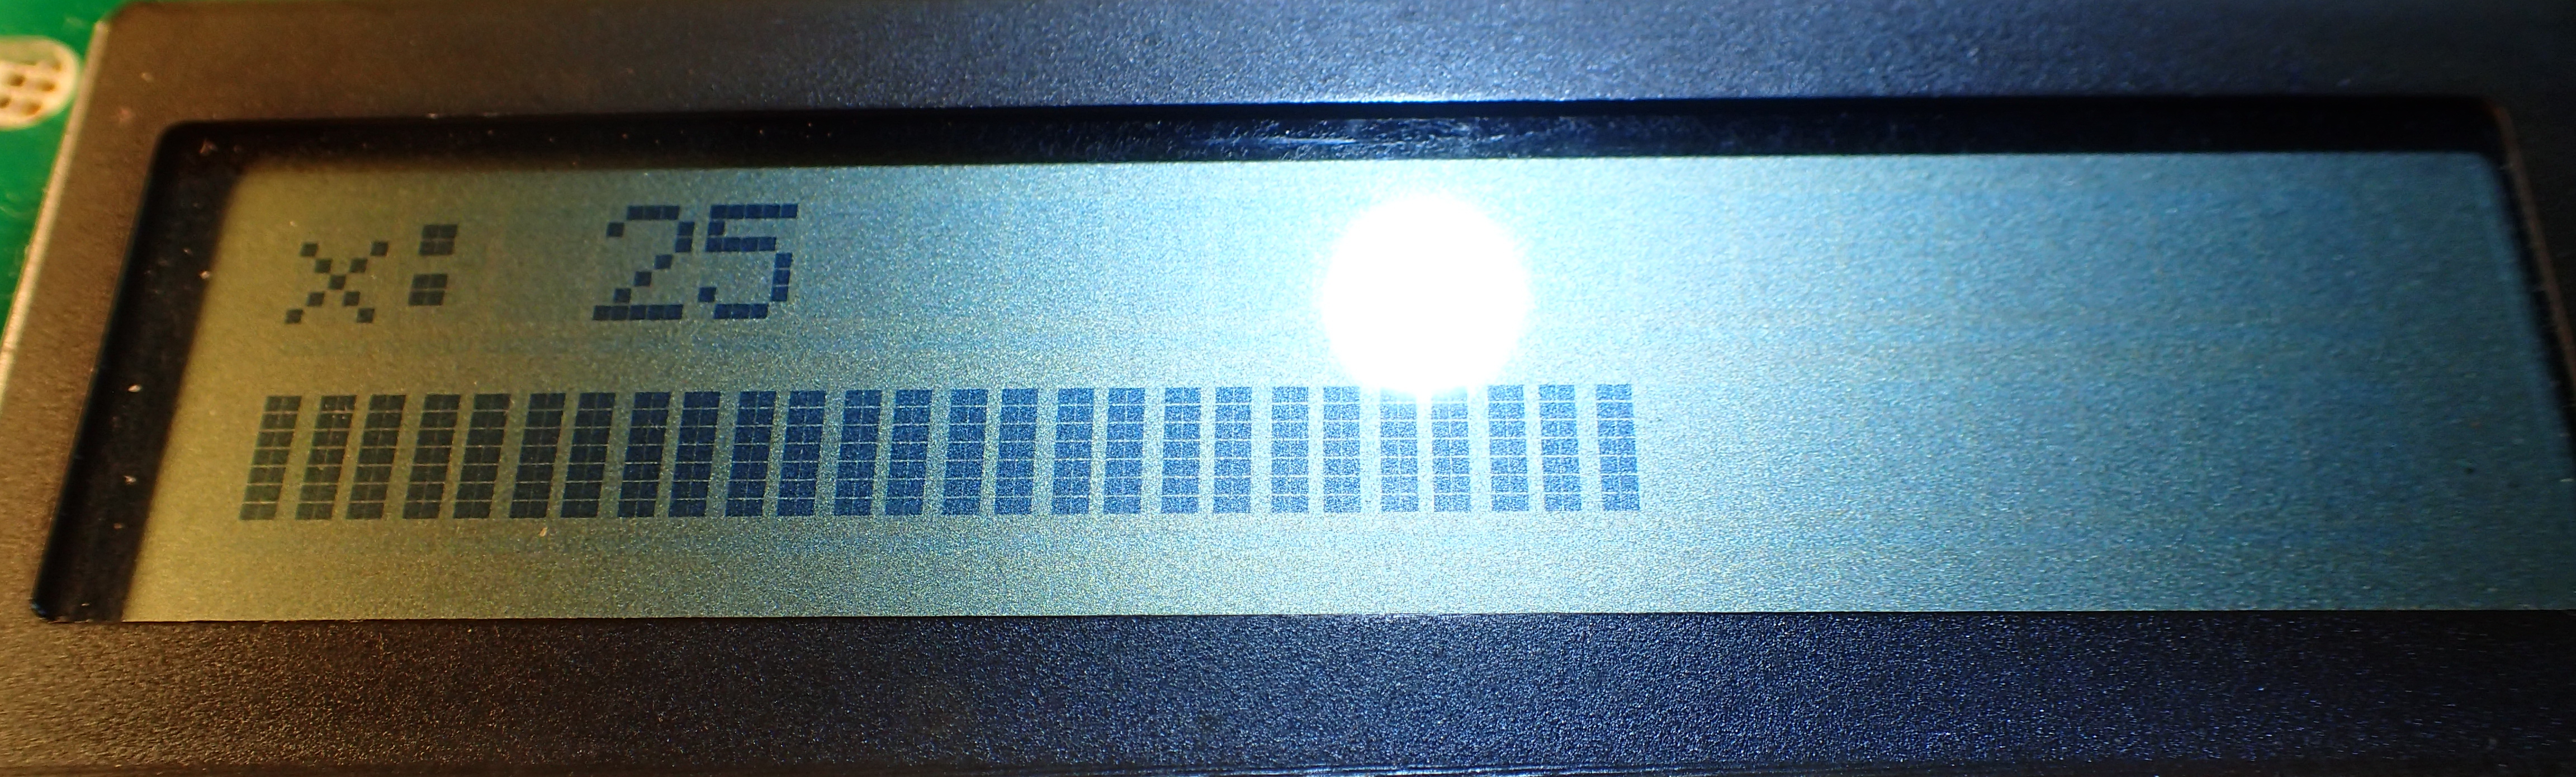 uPD7228 LCD displaying mixed bar graph and text